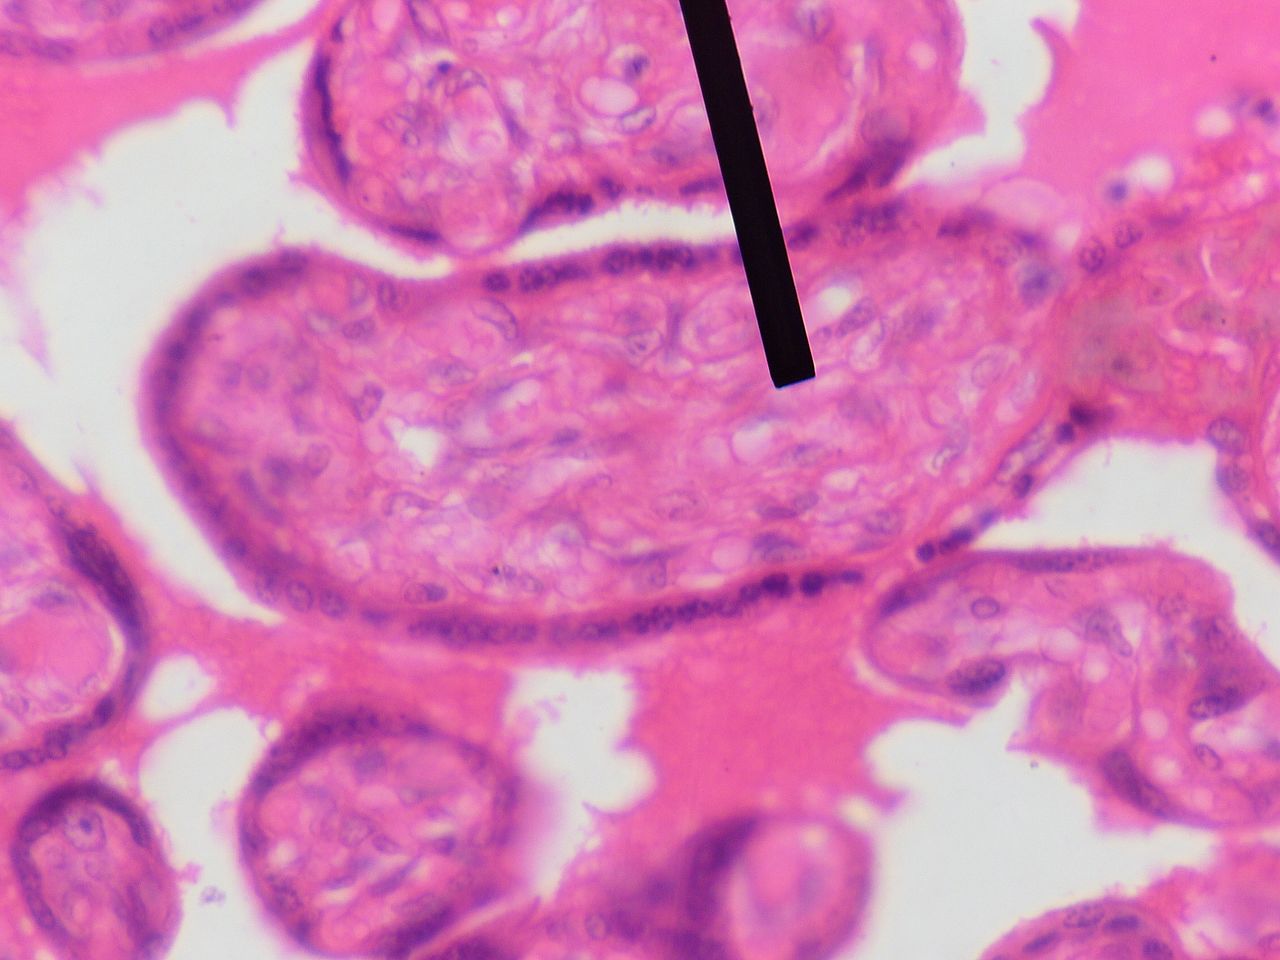 Micrograph showing mesenchymal tissue